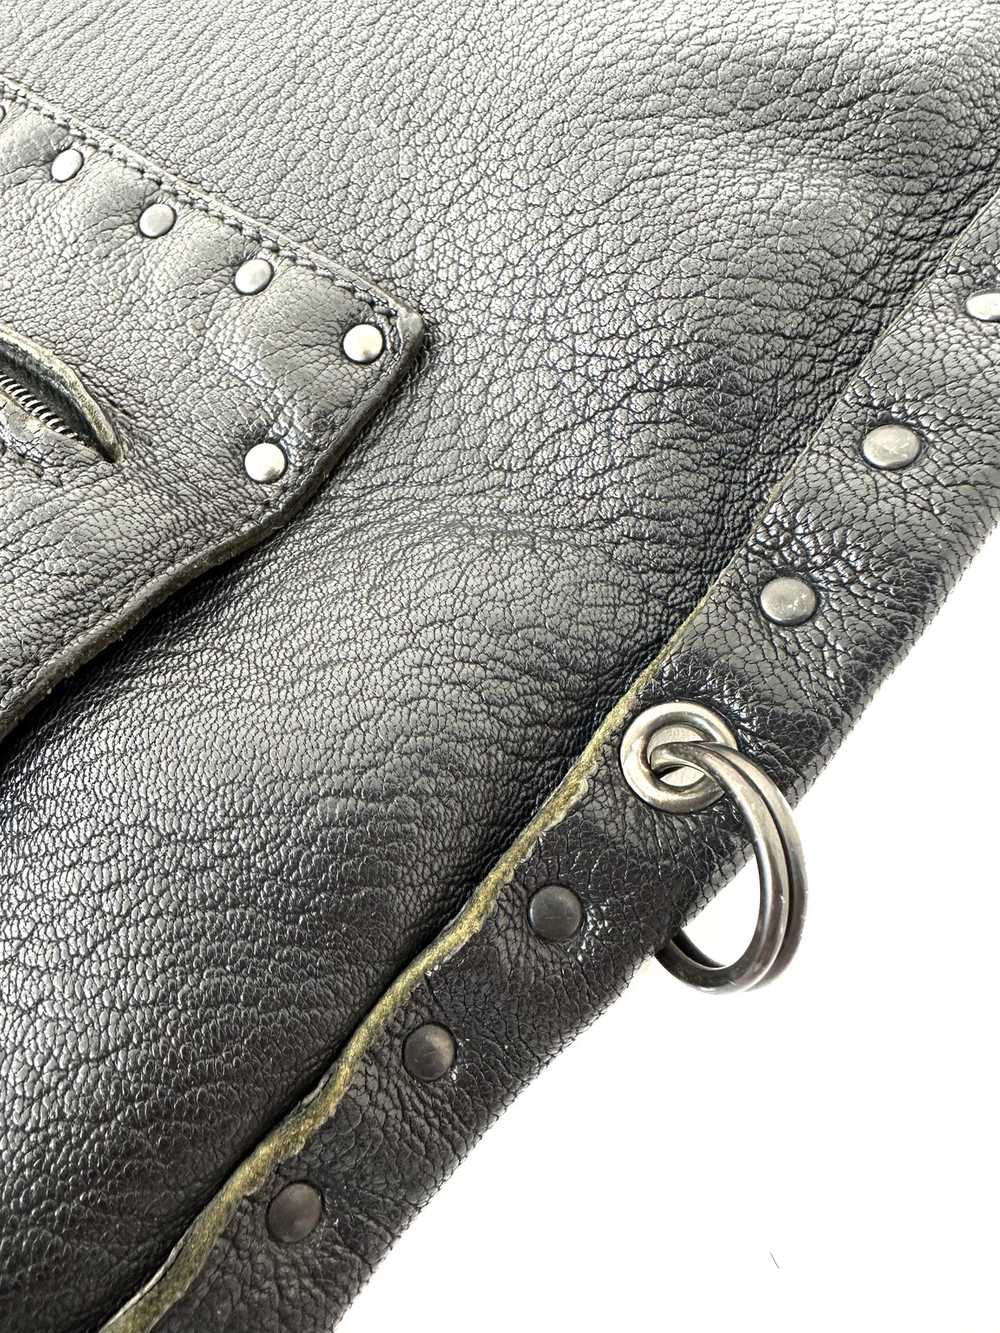 90s Bottega Veneta Leather Studded Bag - image 5